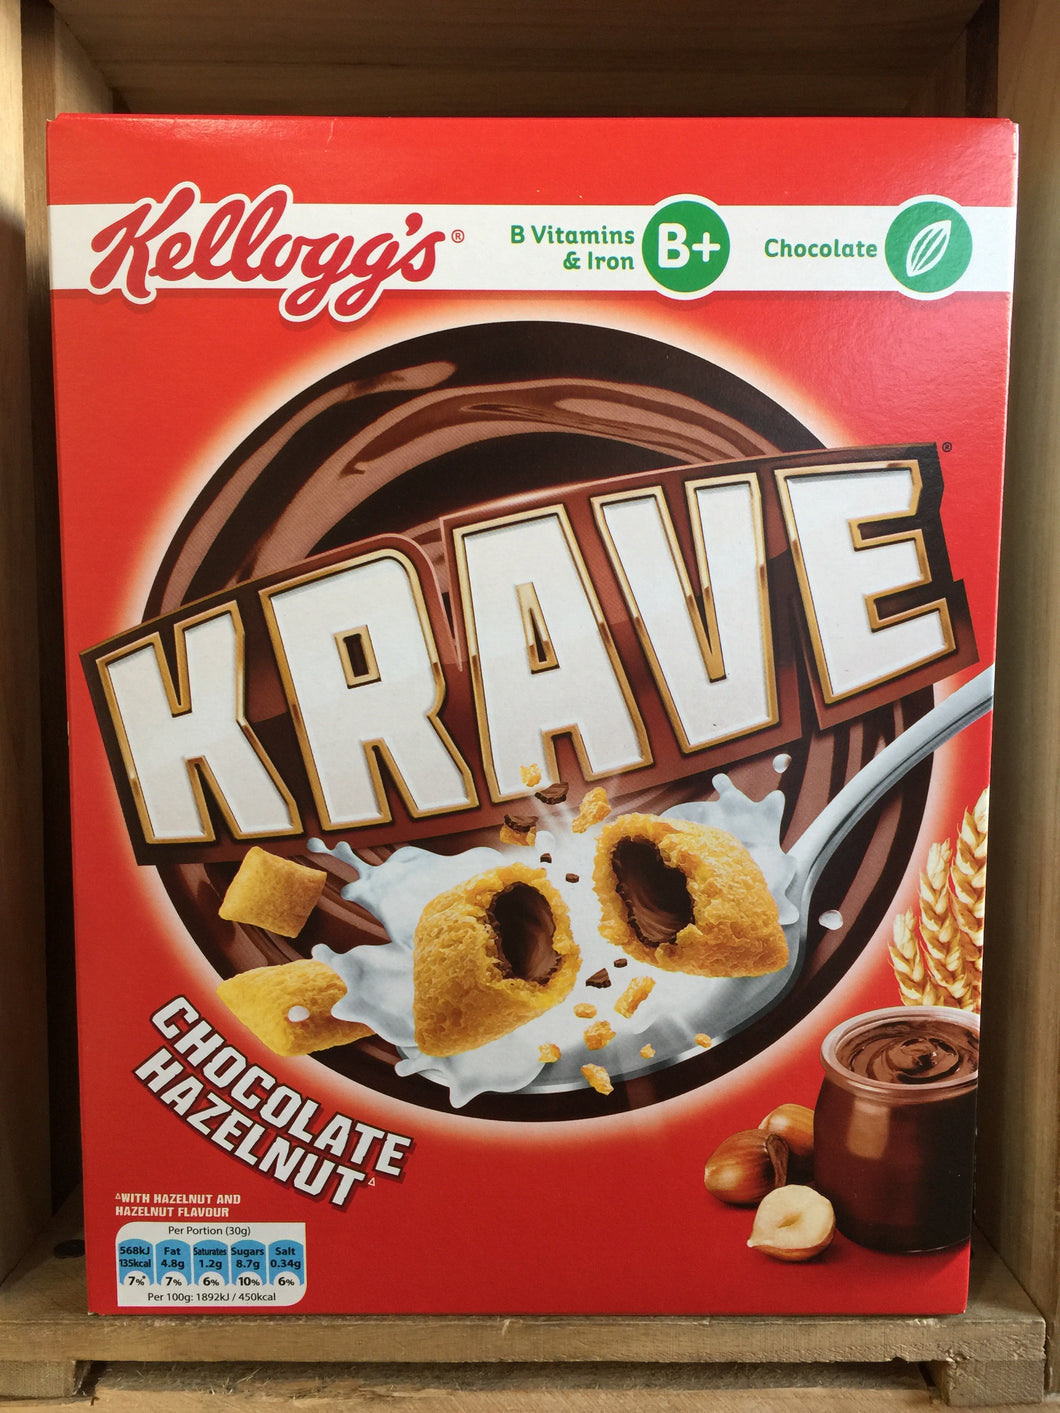 Kellogg's Krave Chocolate Hazelnut 375g